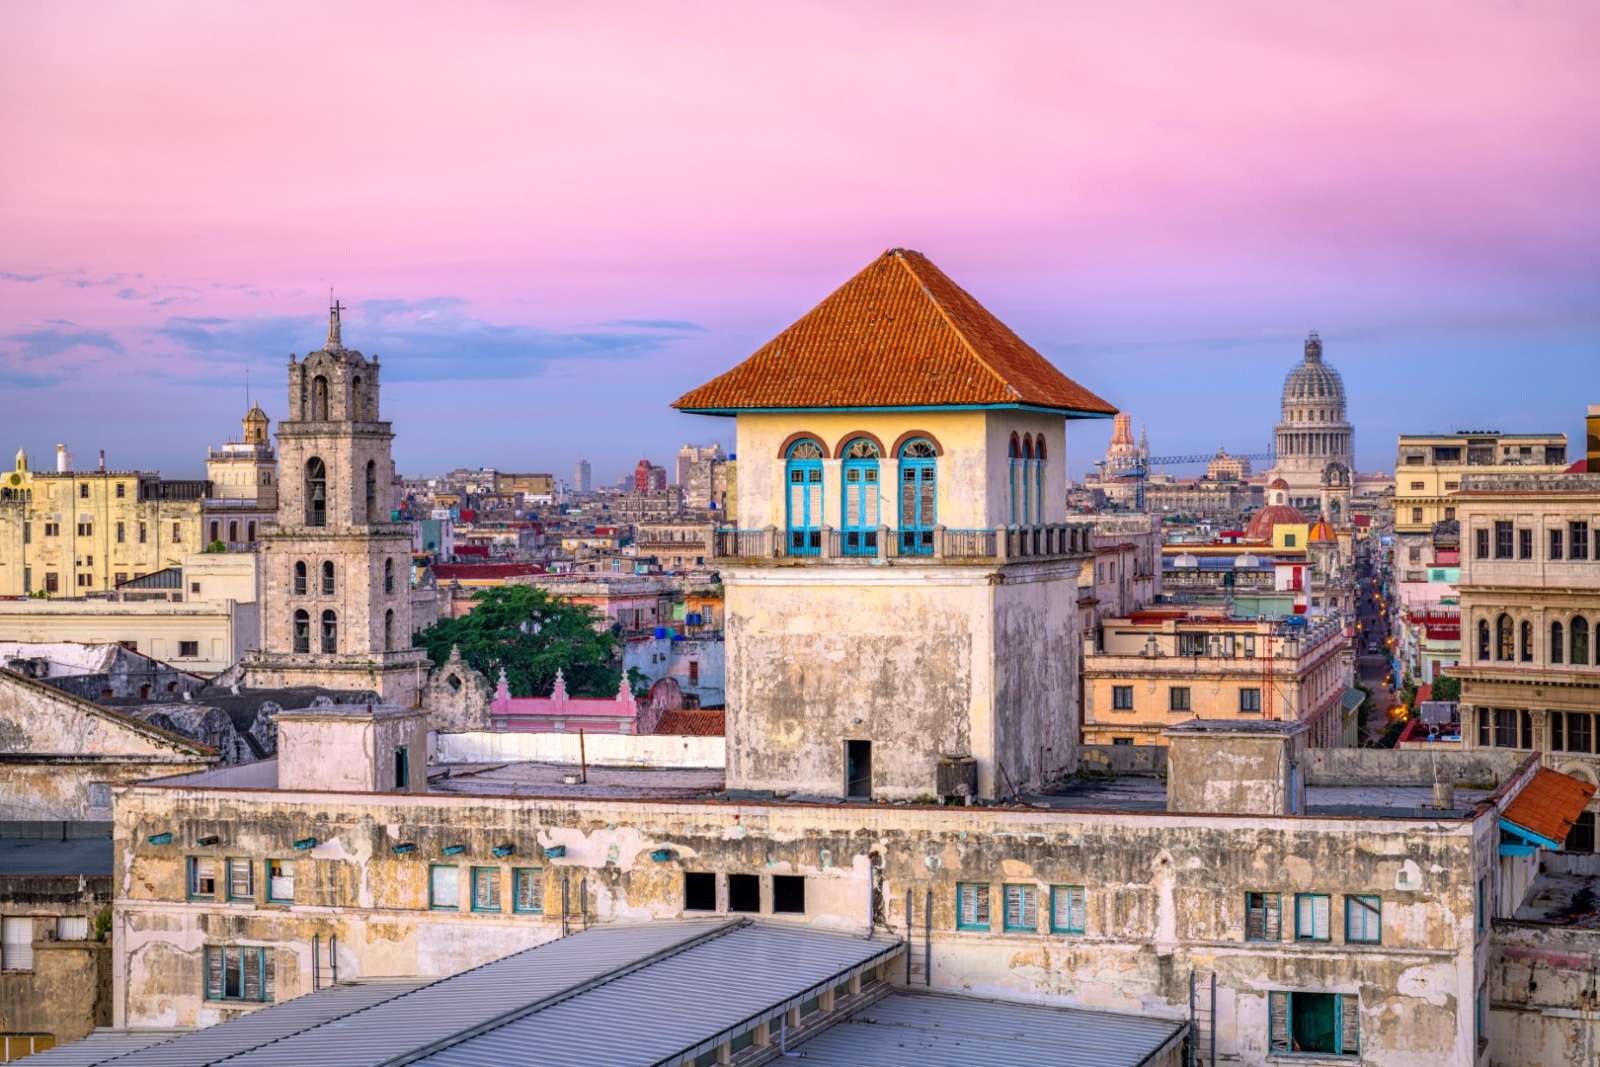 The skyline of Havana